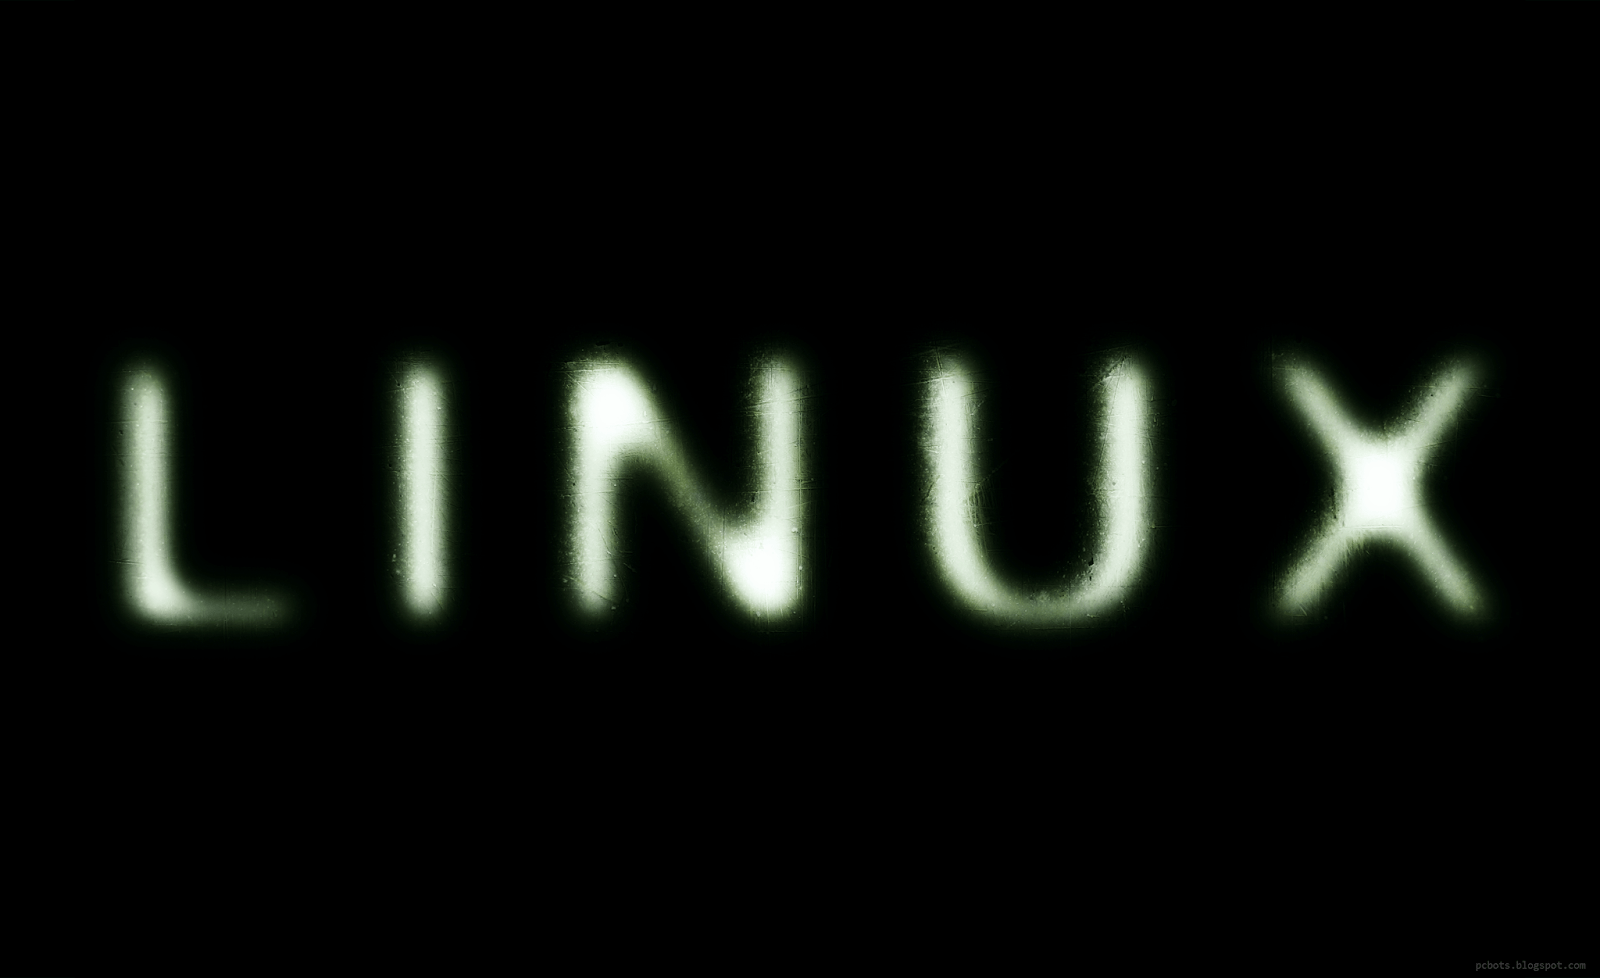 programming code untitled Unix operating system open source Linux 720P  wallpaper hdwallpaper desktop  Linux Operating system Unix